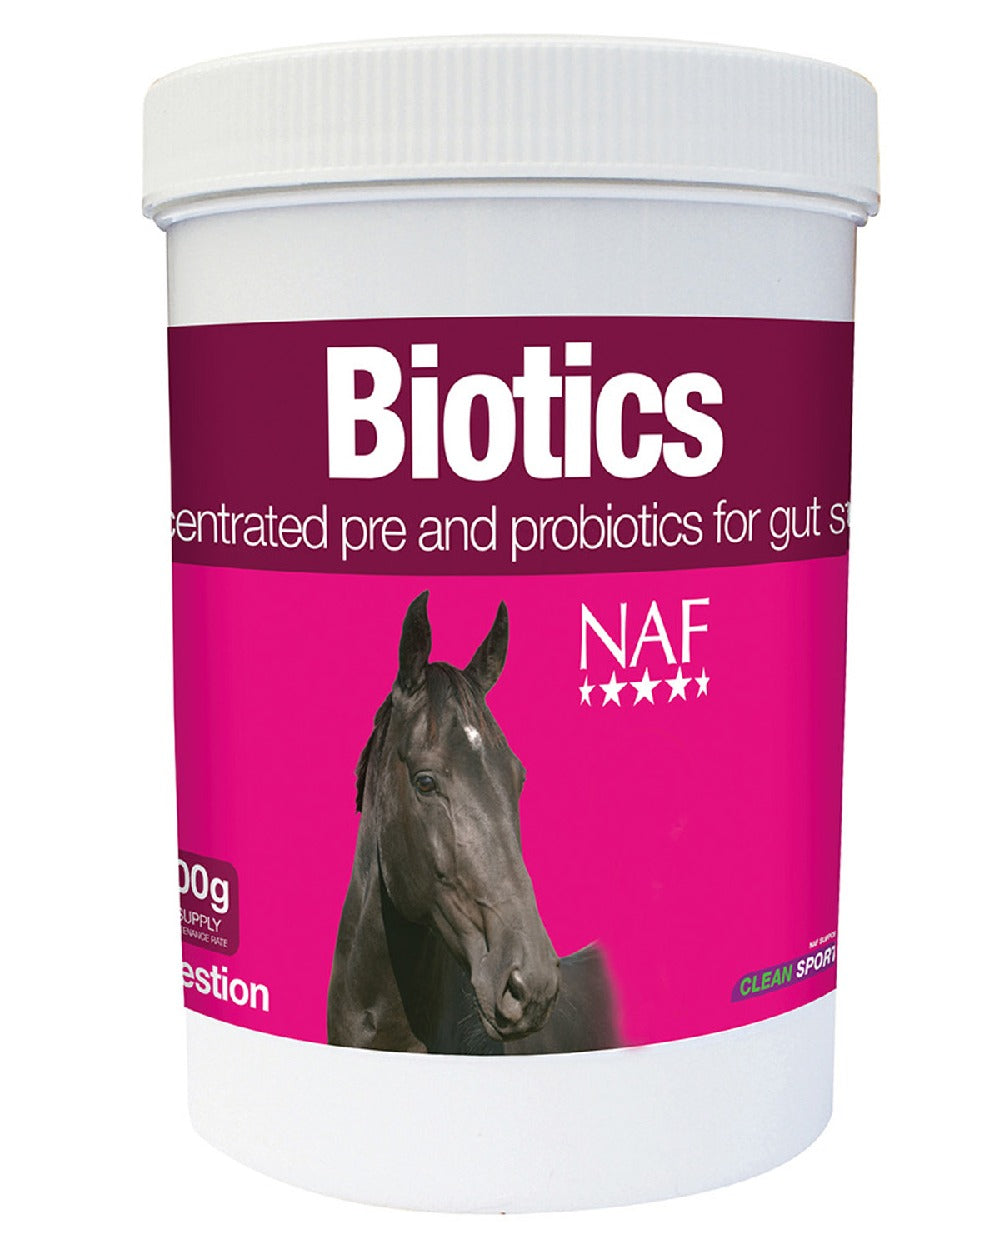 NAF Biotics 800gm on white background